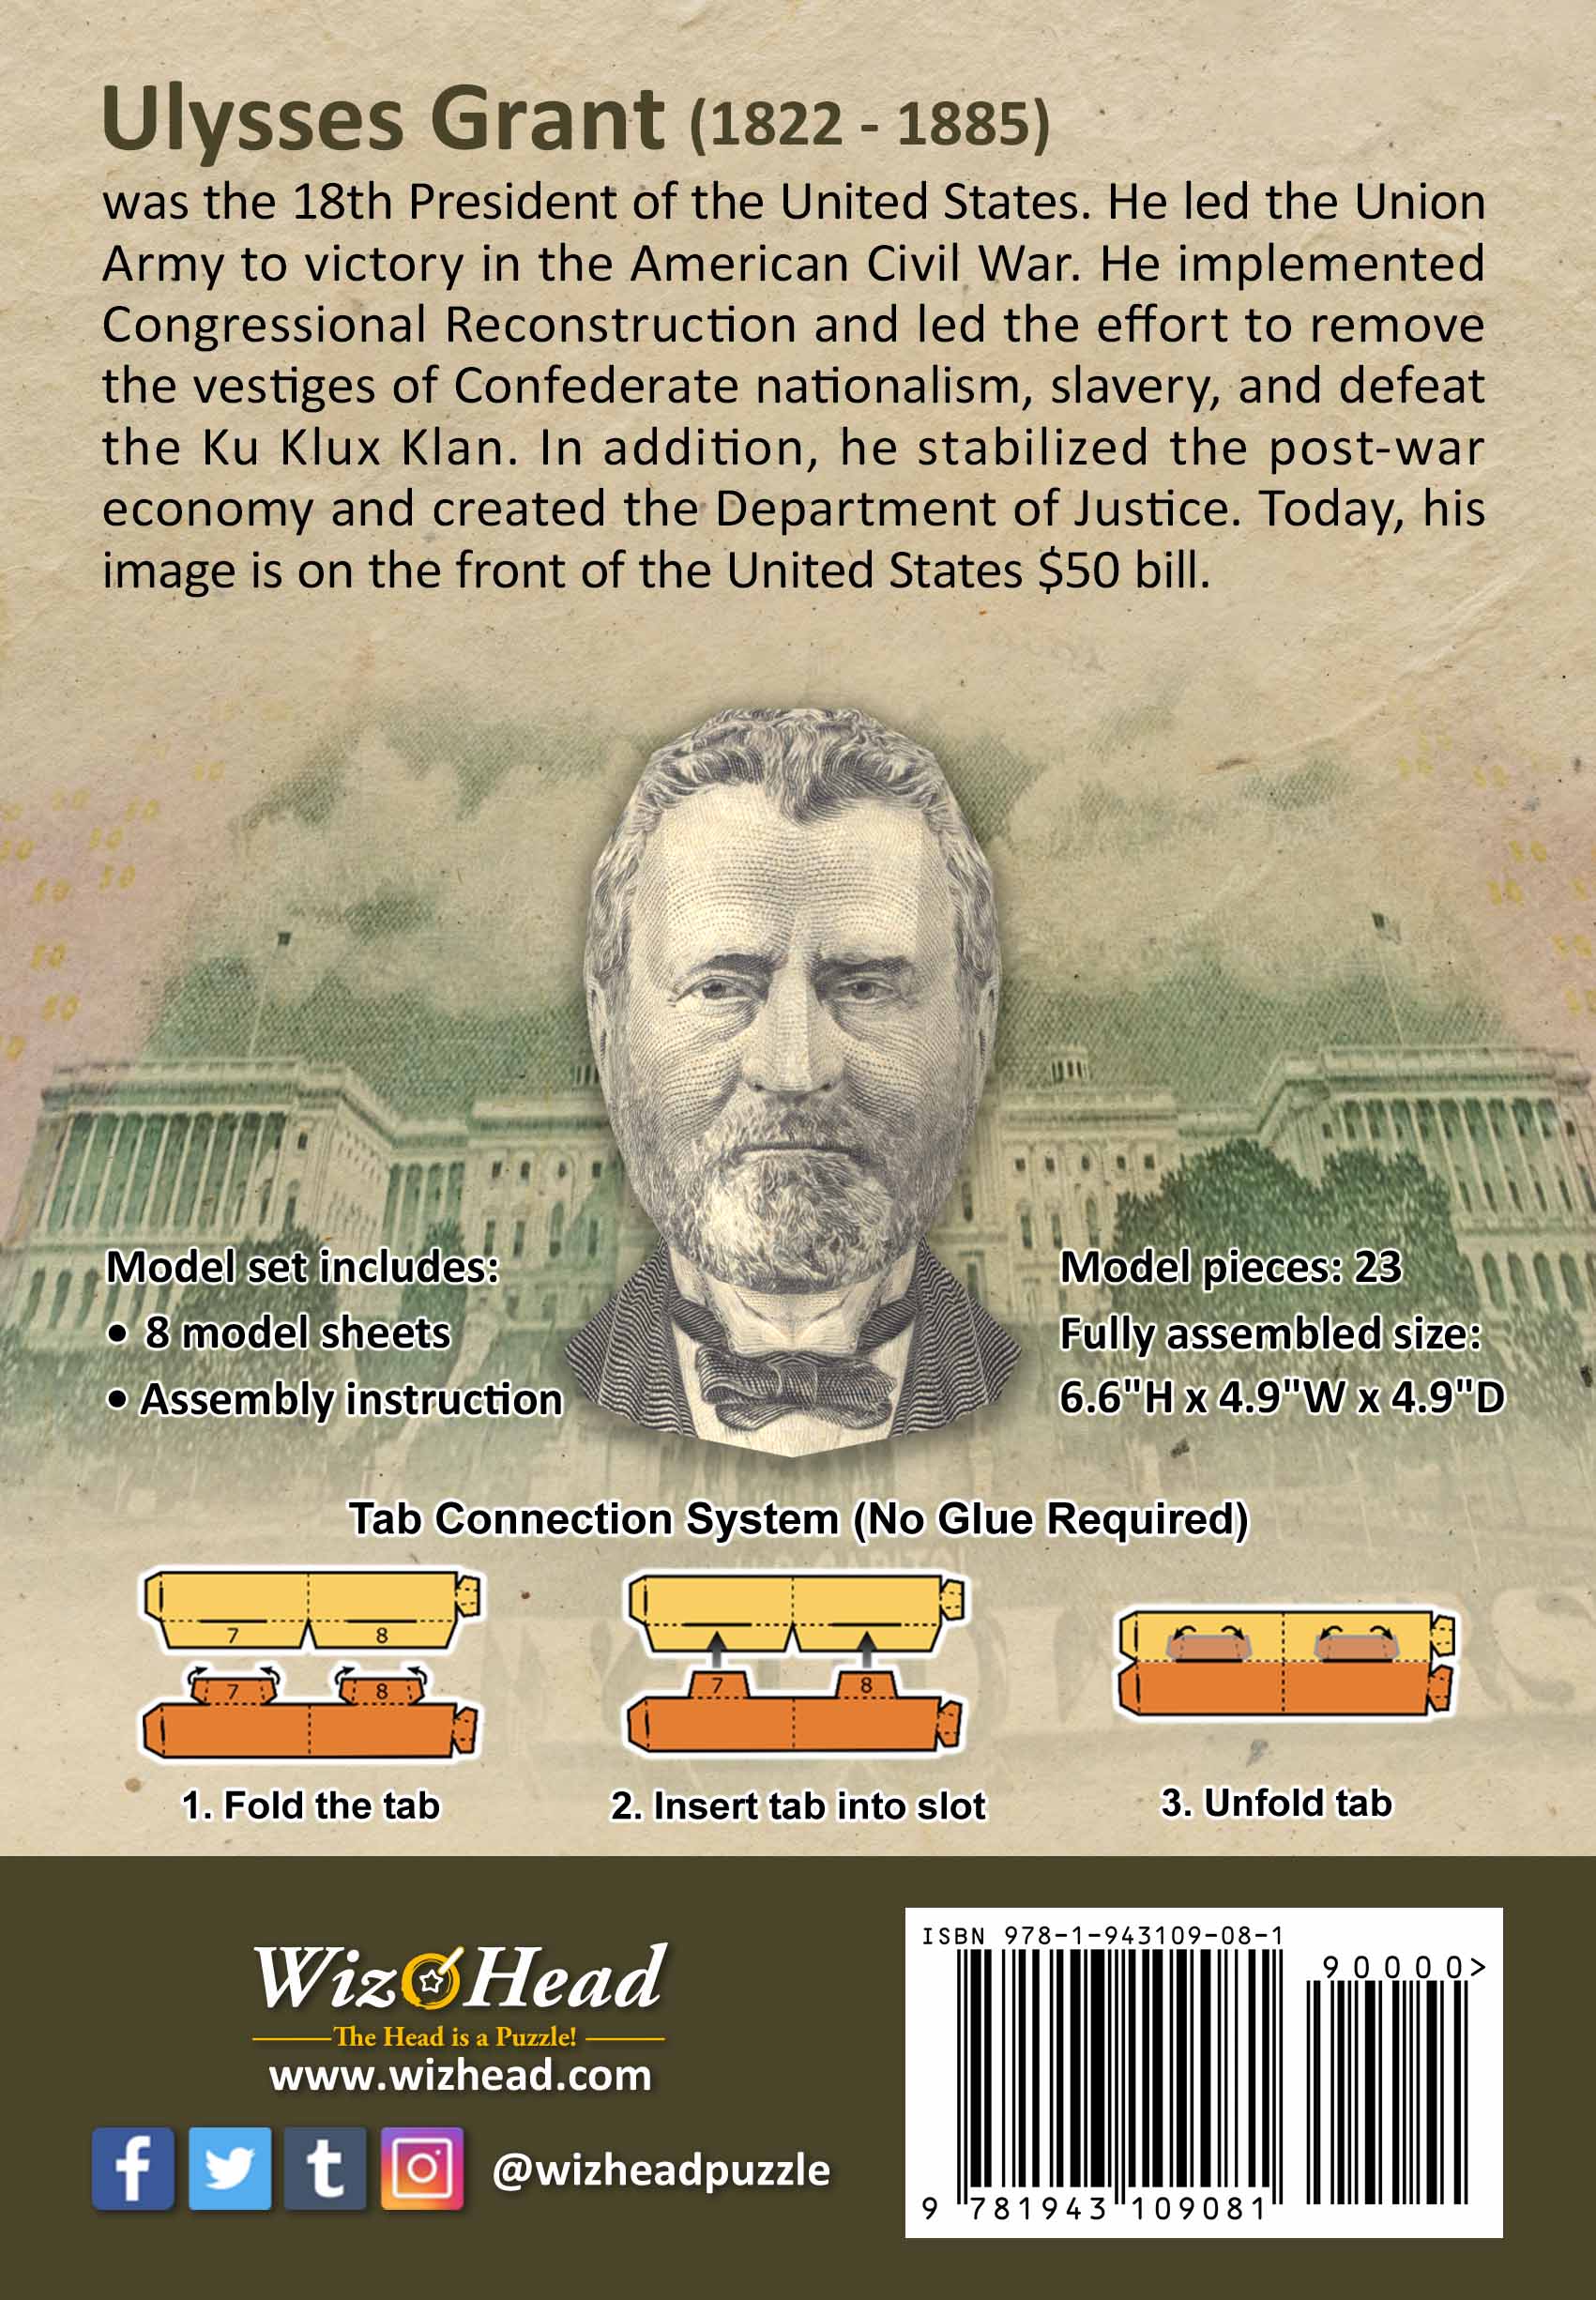 US $50 Bill- Ulysses Grant (Full Size)